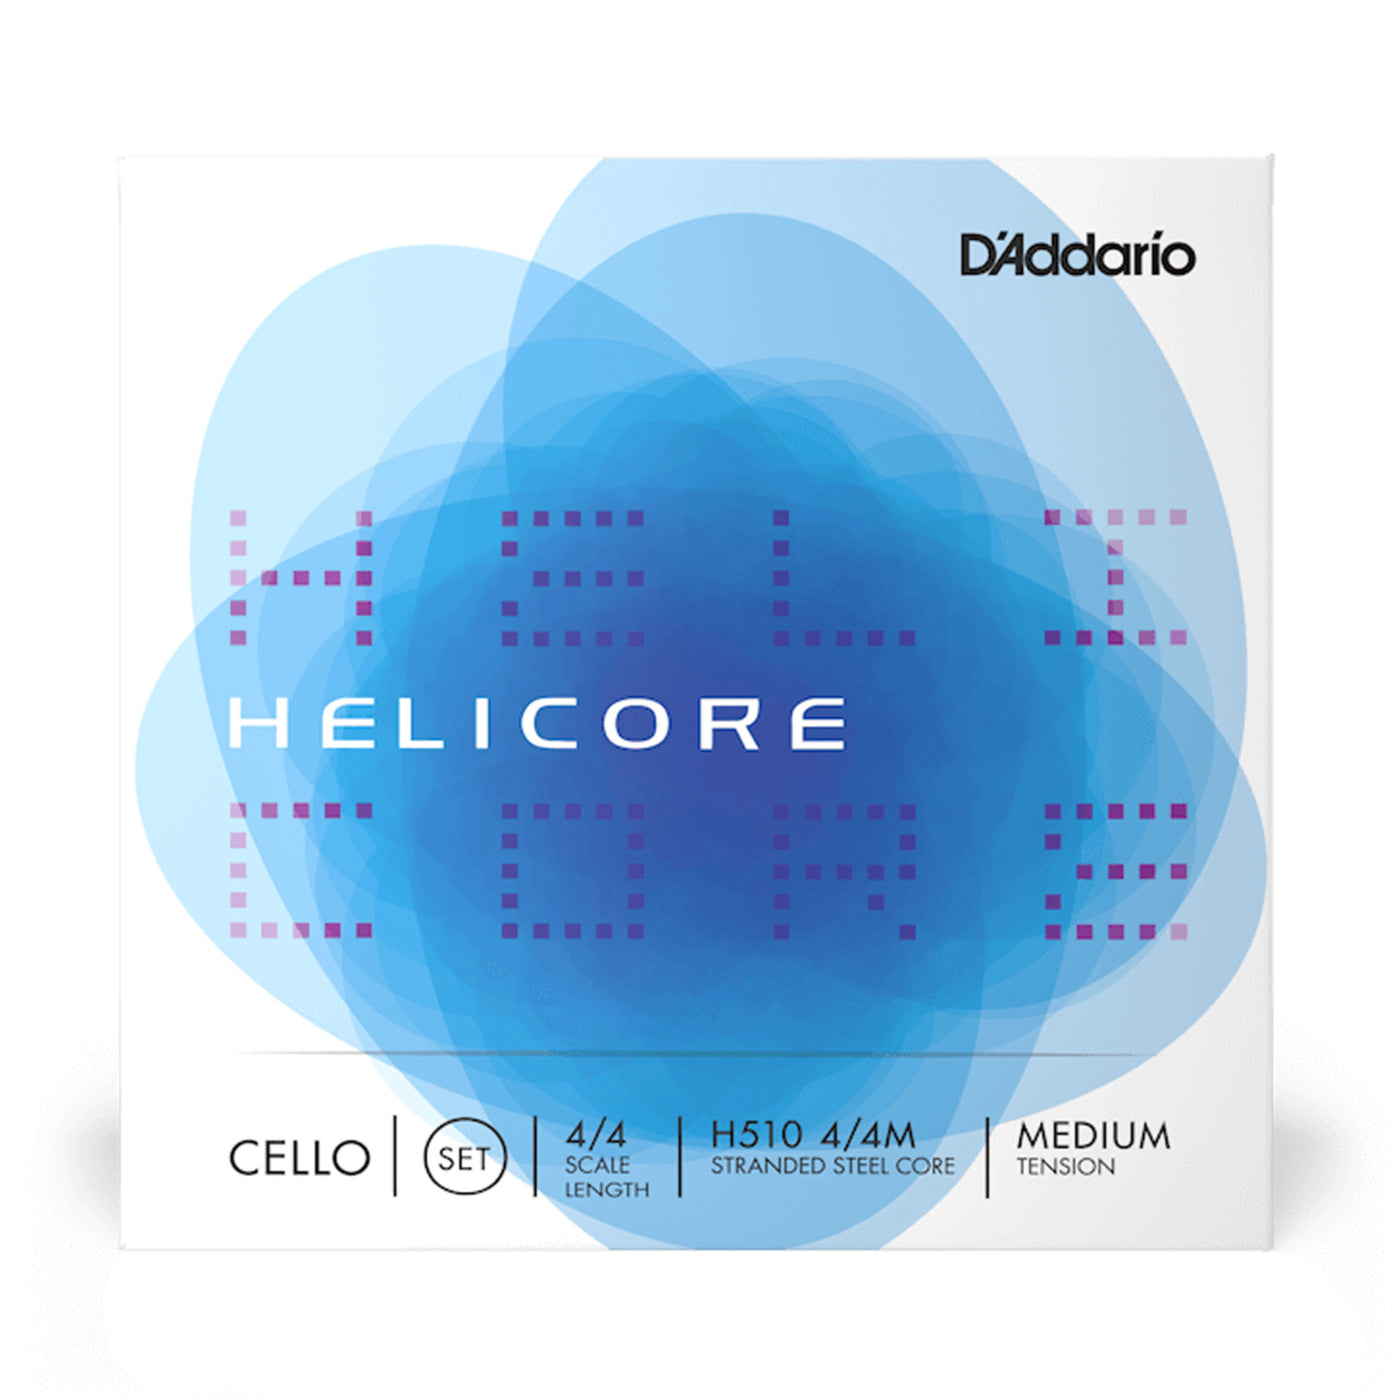 D'Addario Helicore Cello String Set, 4/4 Scale, Medium Tension